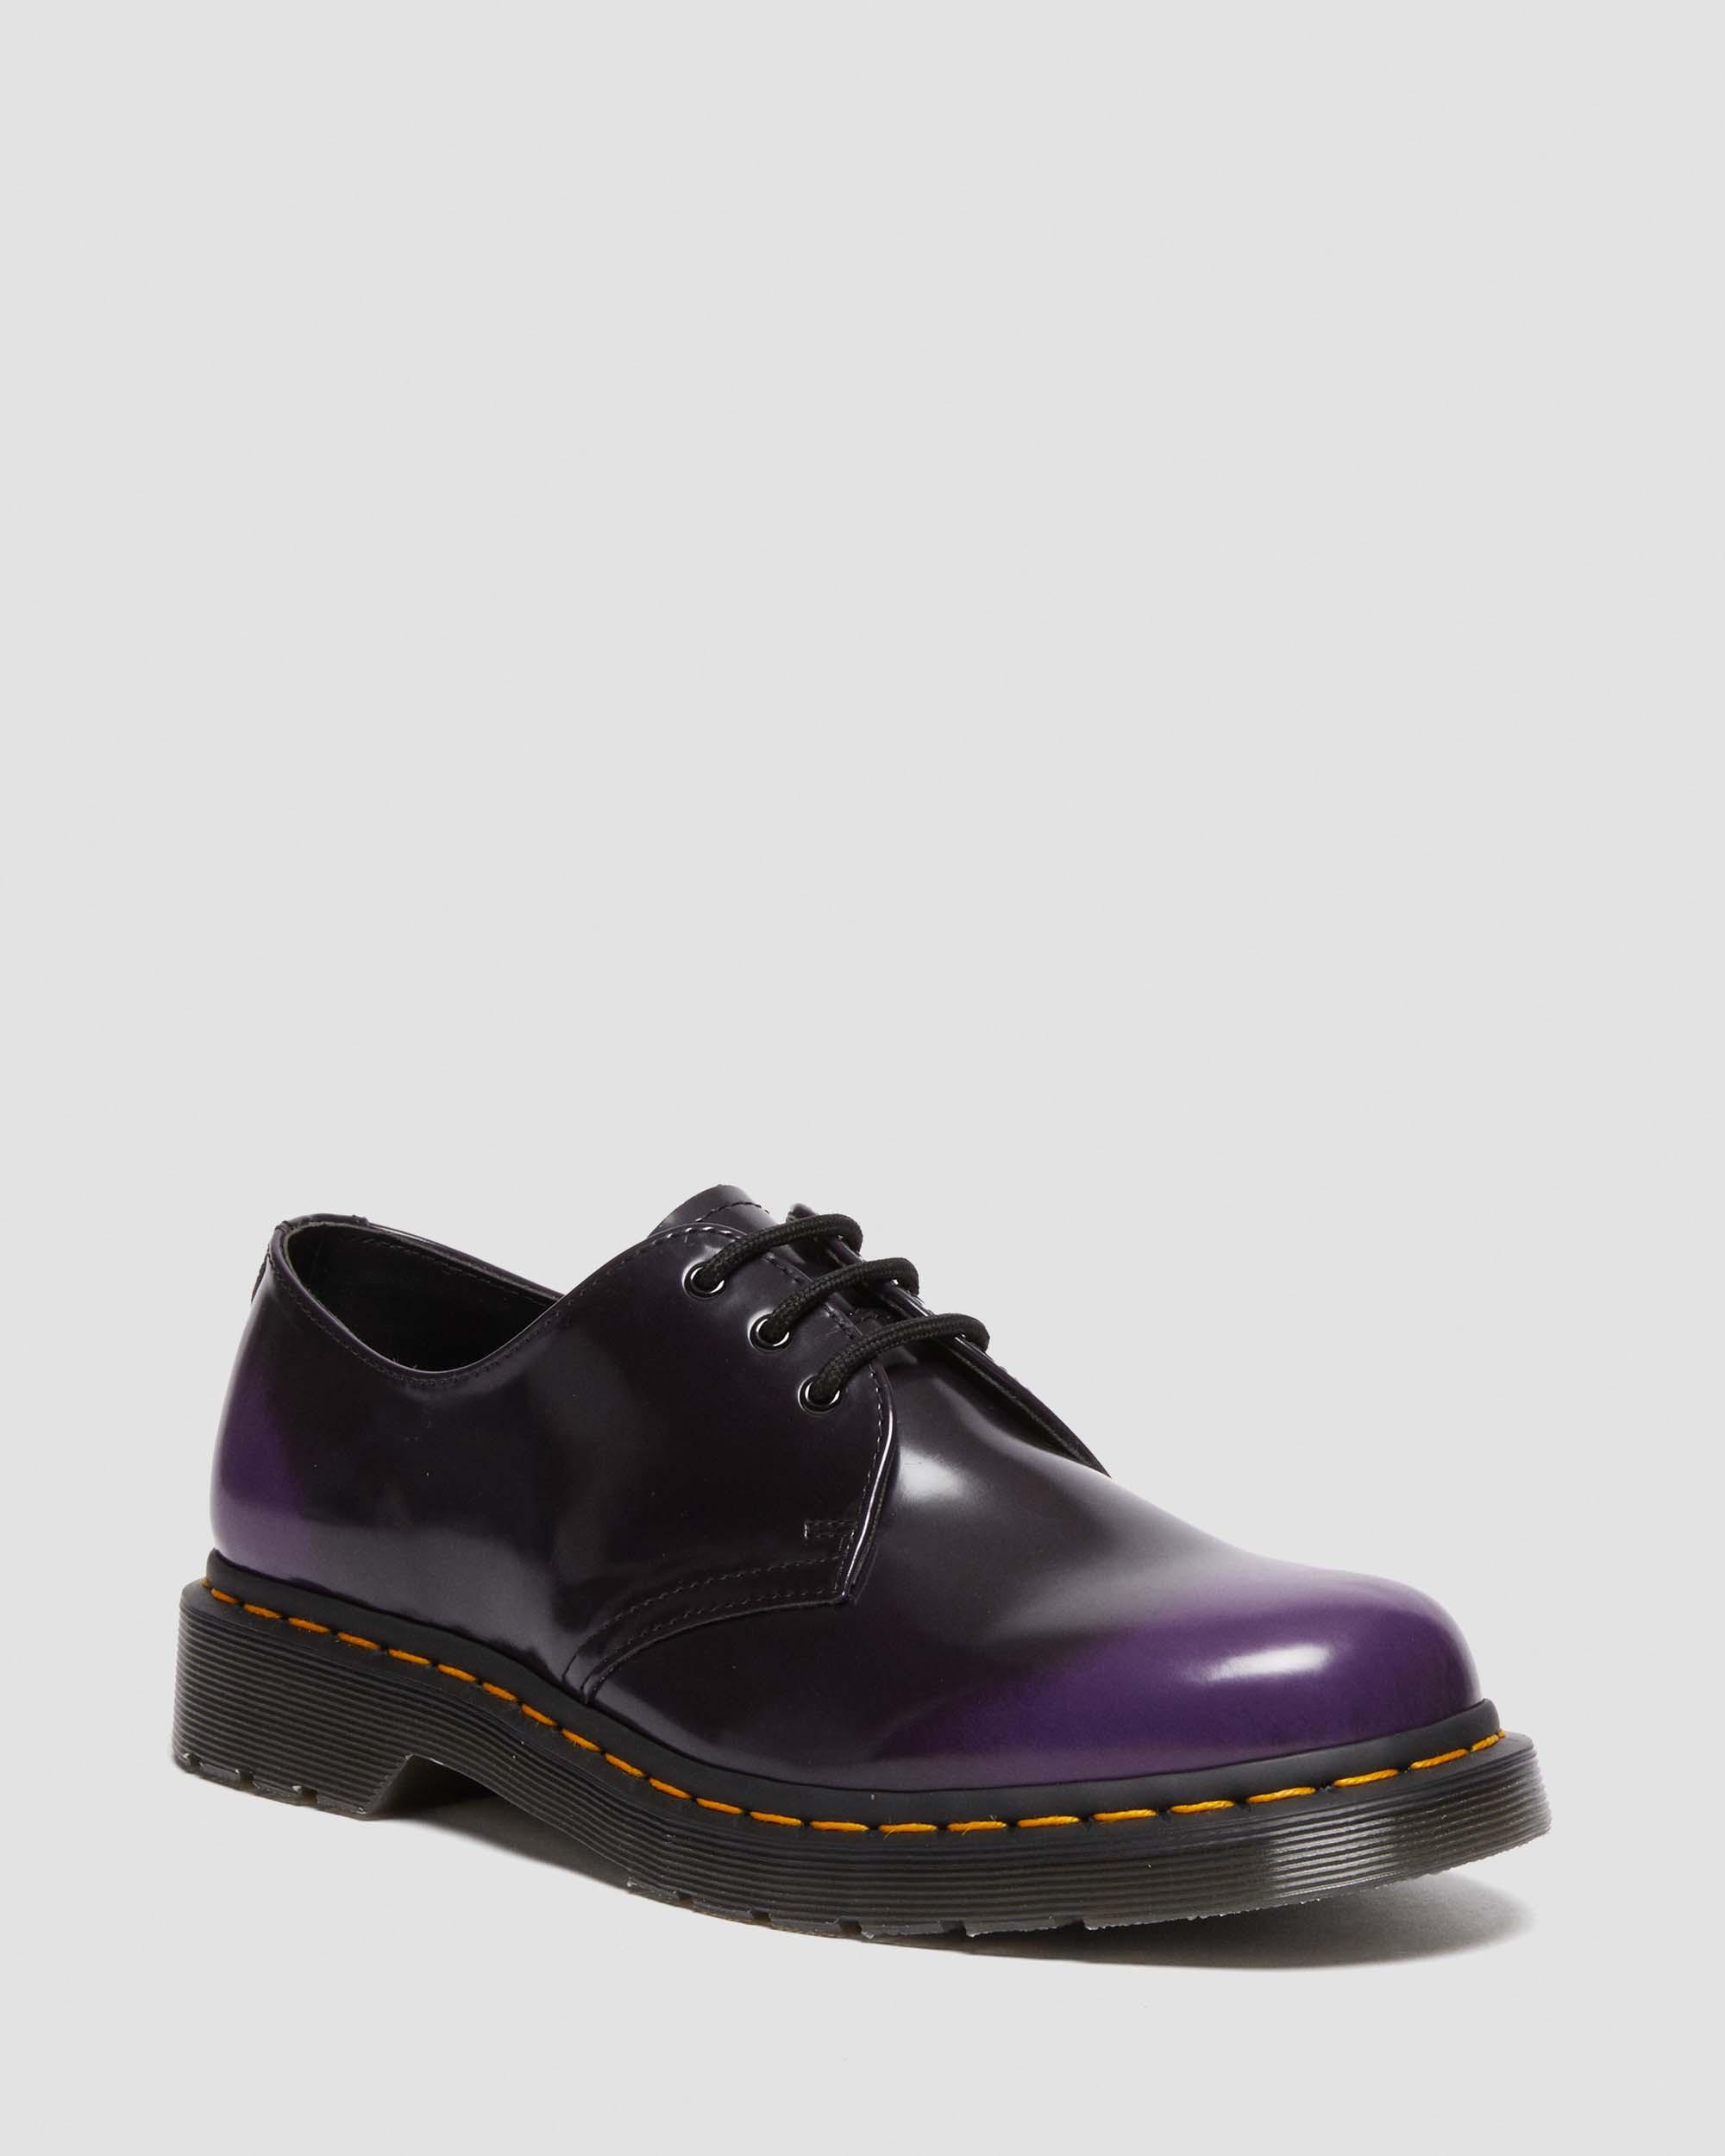 Vegan 1461 Oxford Shoes Black/rich Martens Purple in | Dr